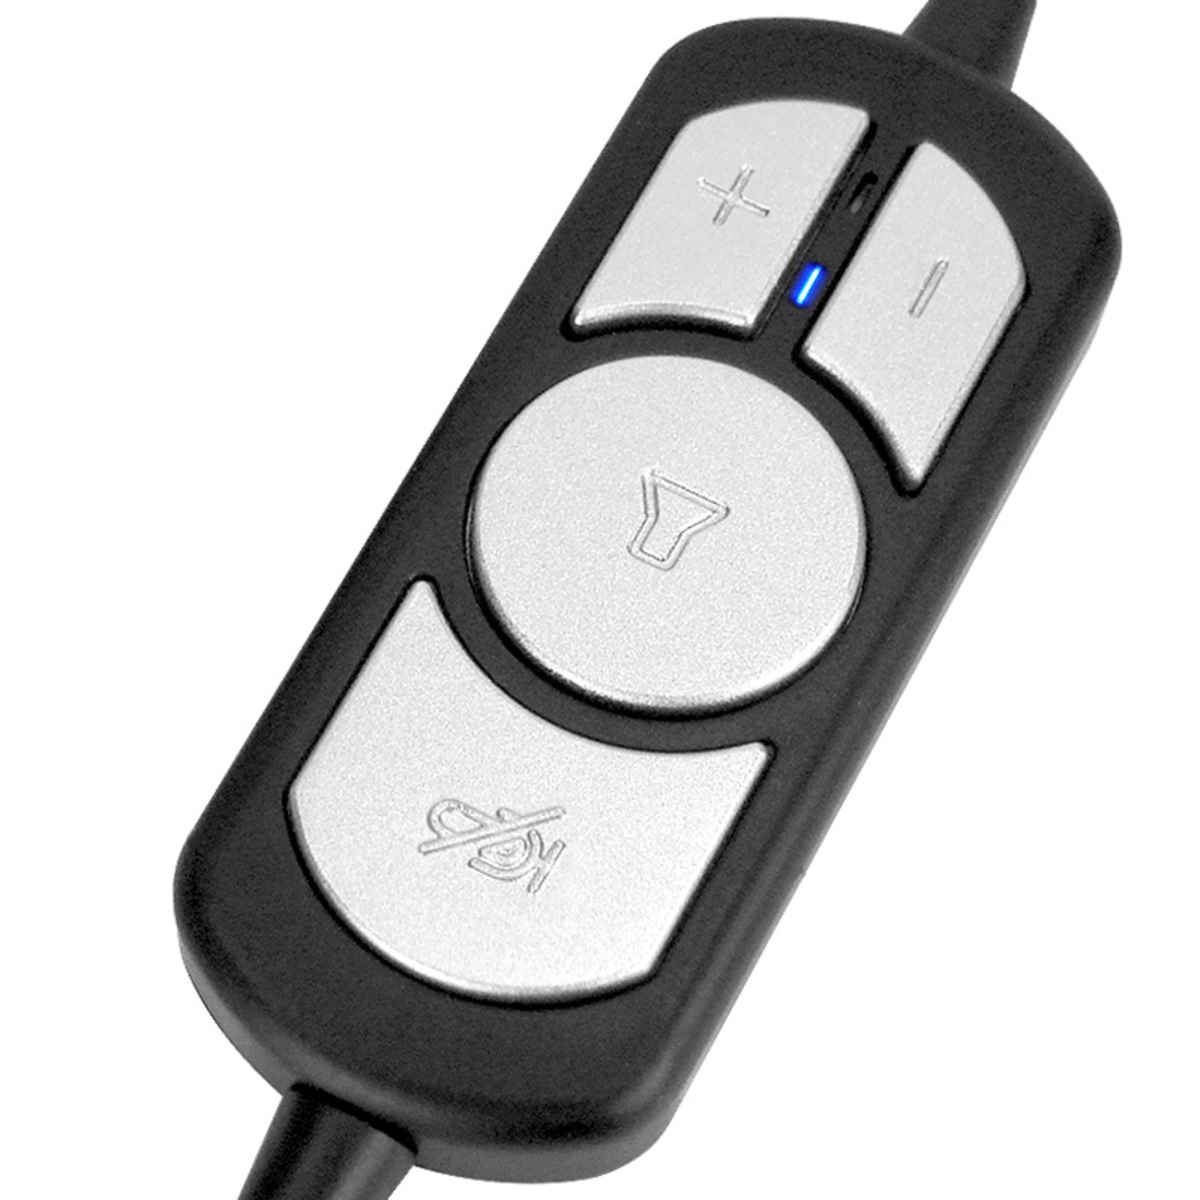 Auriculares Klip Xtreme Sekual USB PC Estéreo Livianos Con Control de Volumen - KSH-290